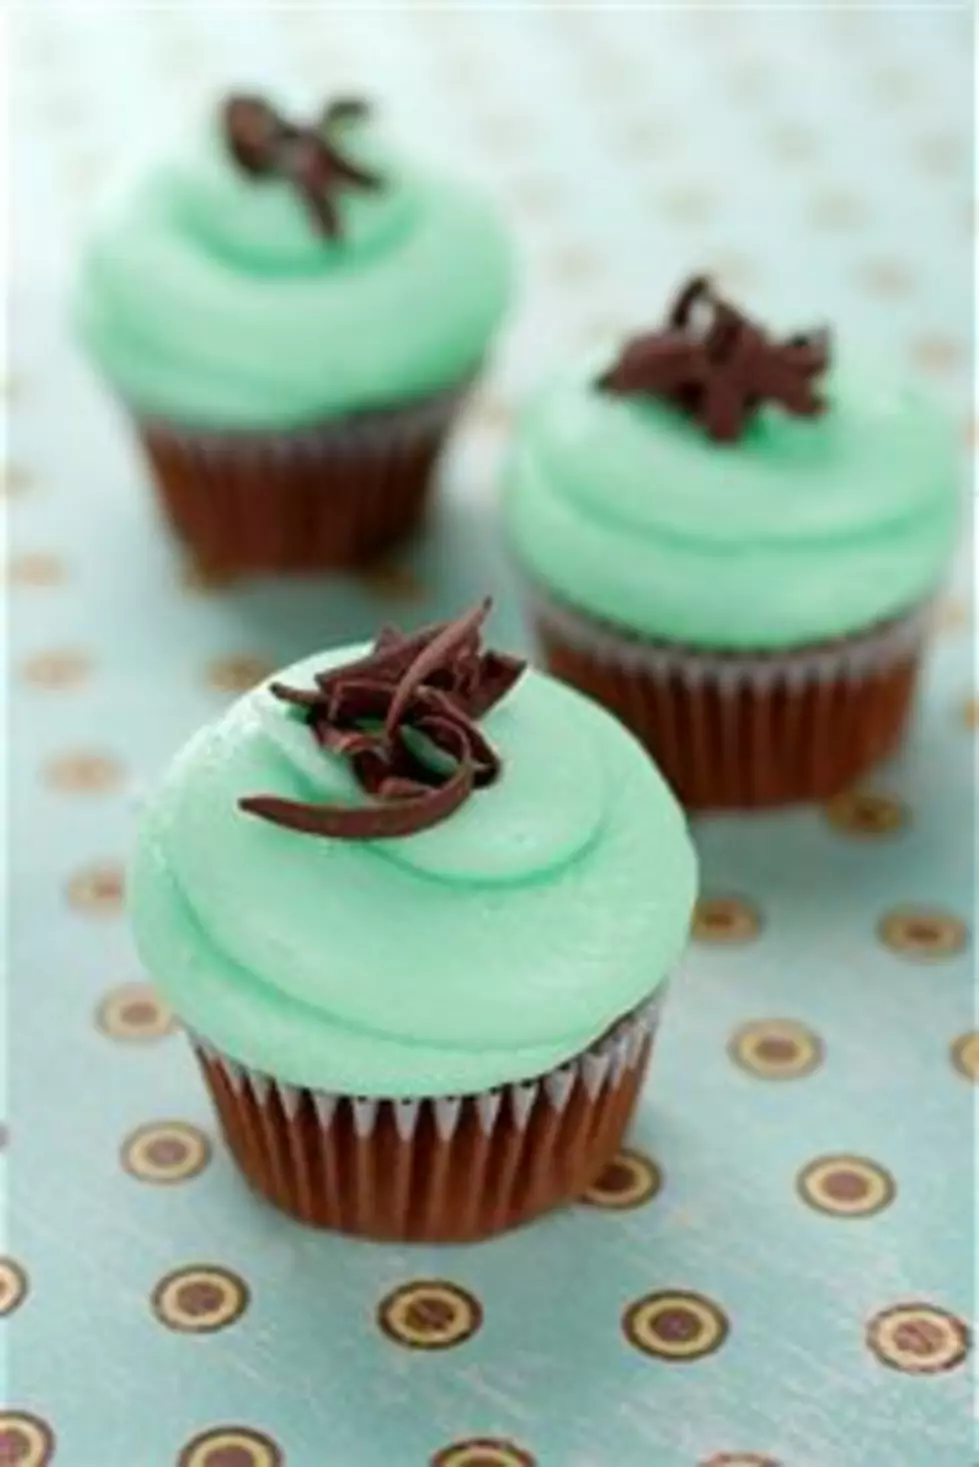 RECIPE: Mint Chocolate Cupcakes